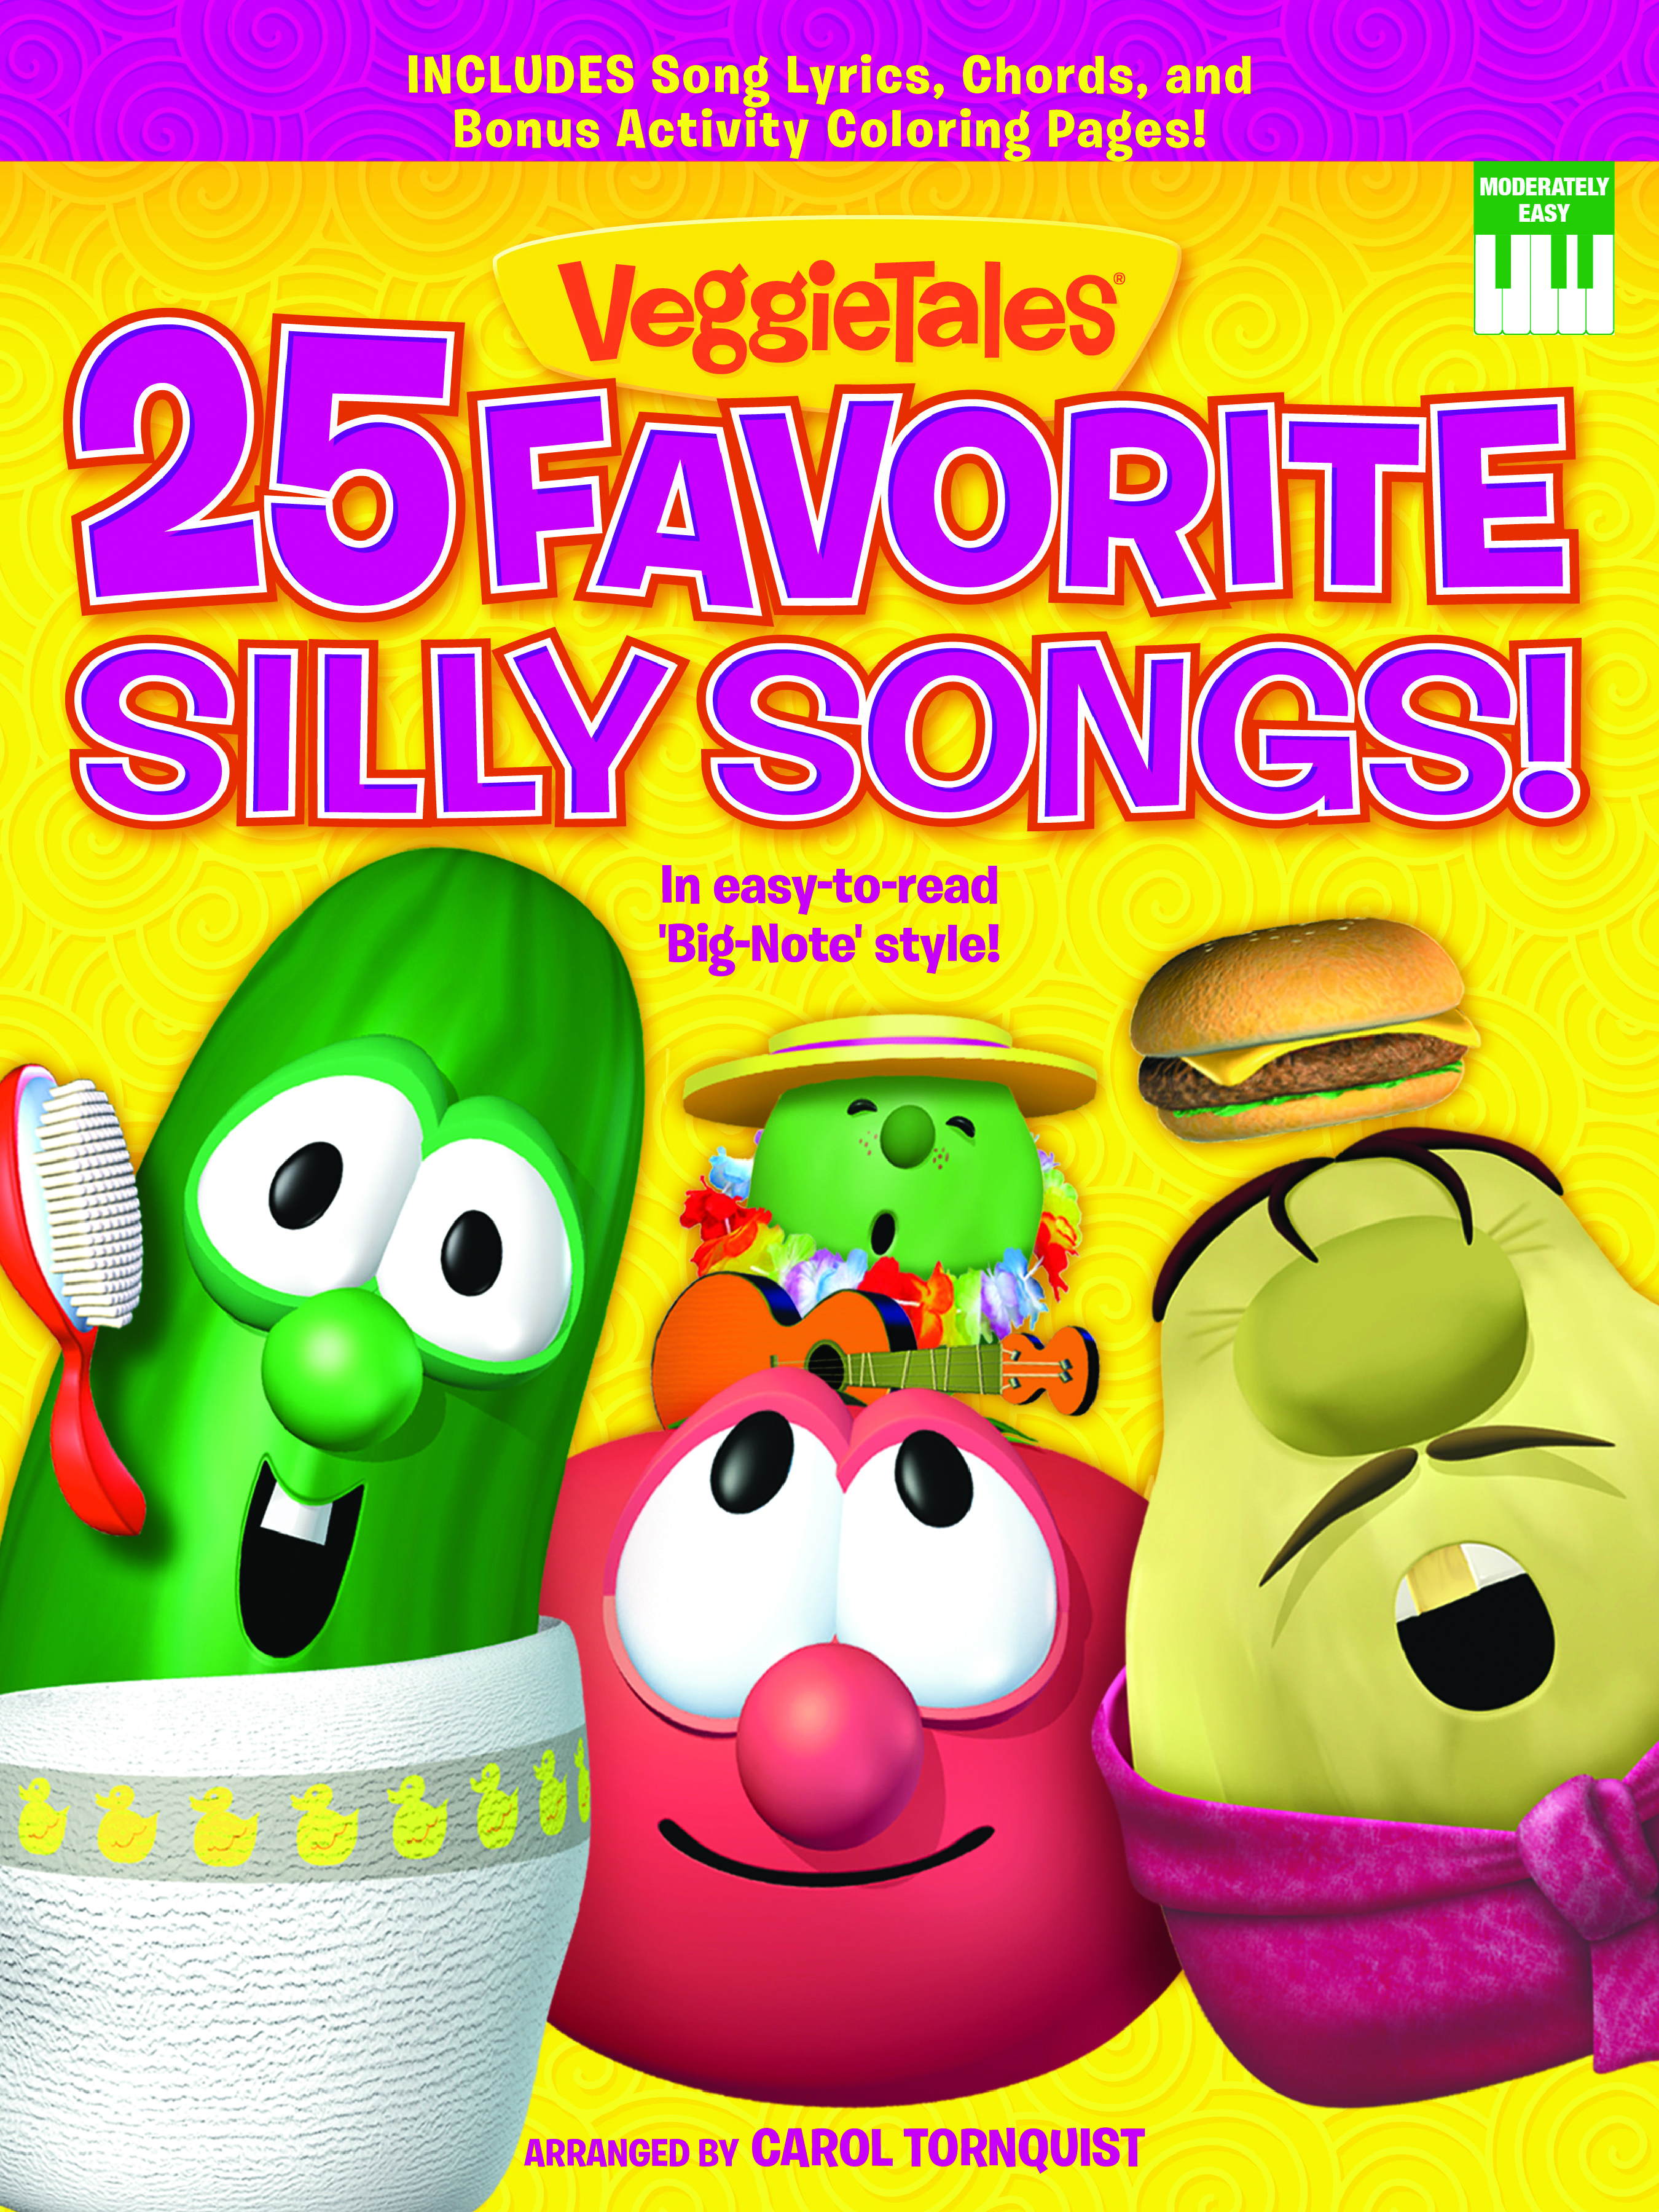 Veggietales 25 Favorite Silly Songs!